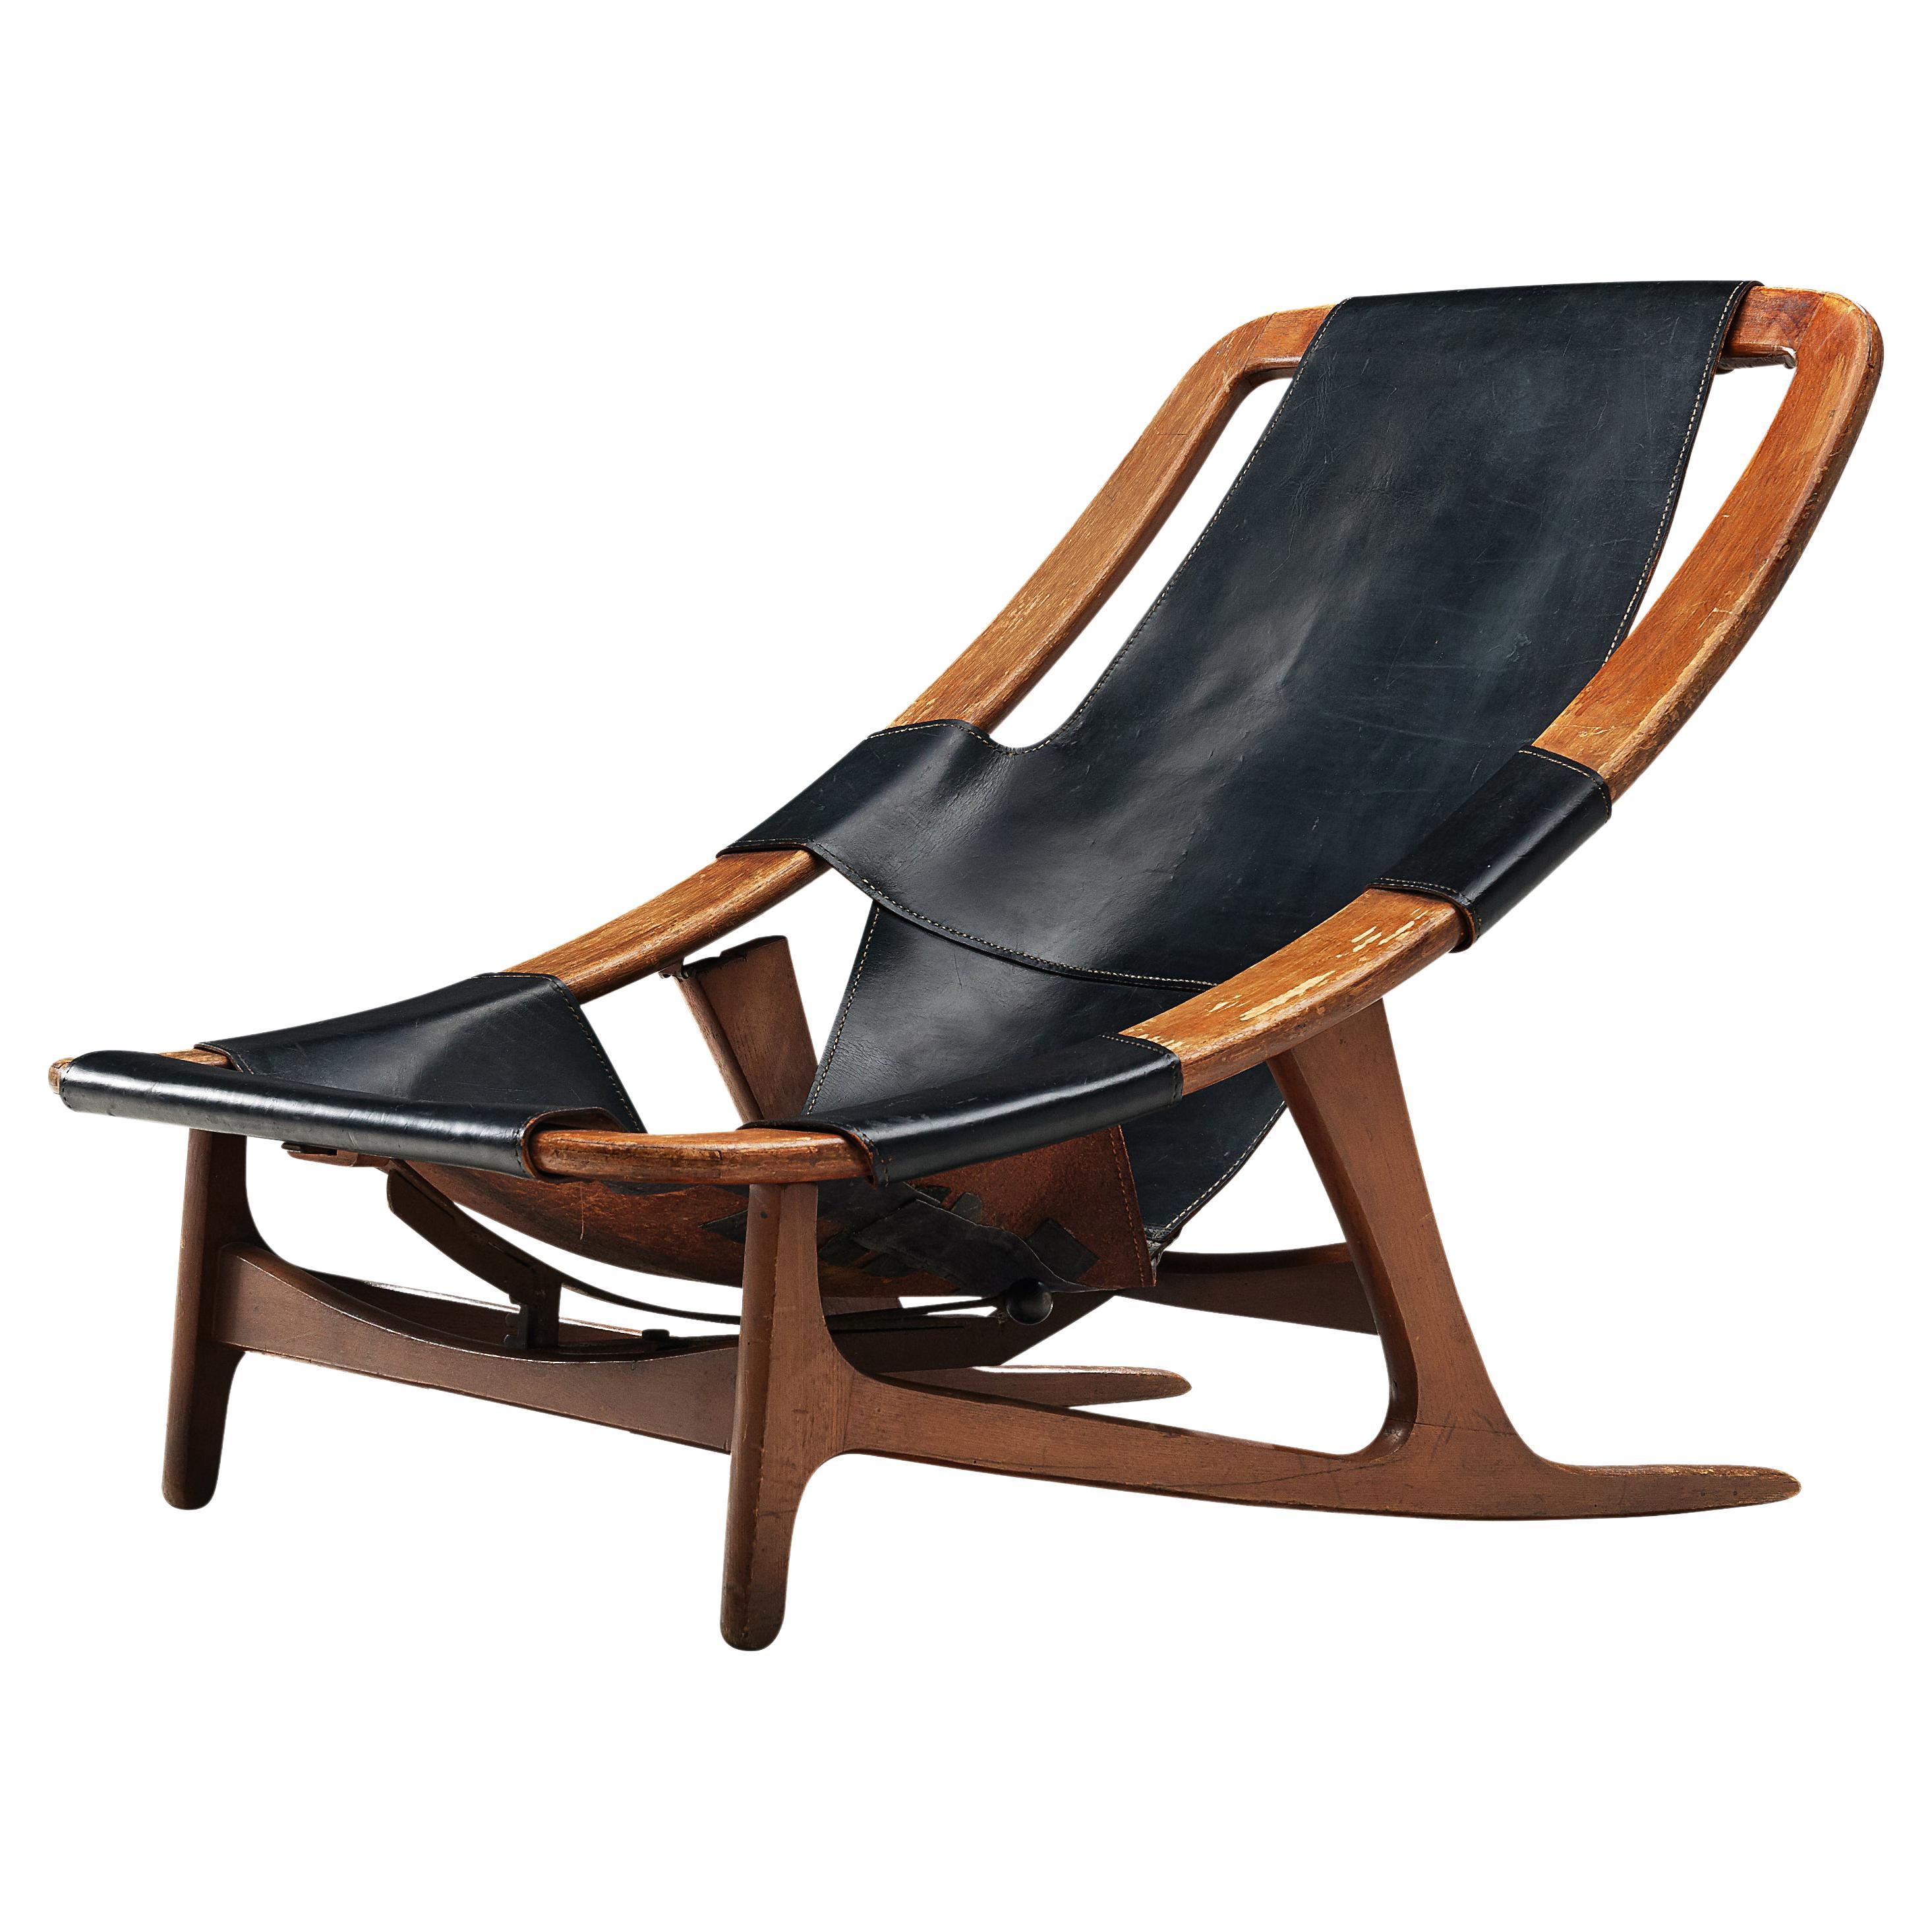 Arne Tidemand Ruud Adjustable 'Holmkollen' Lounge Chair in Black Leather